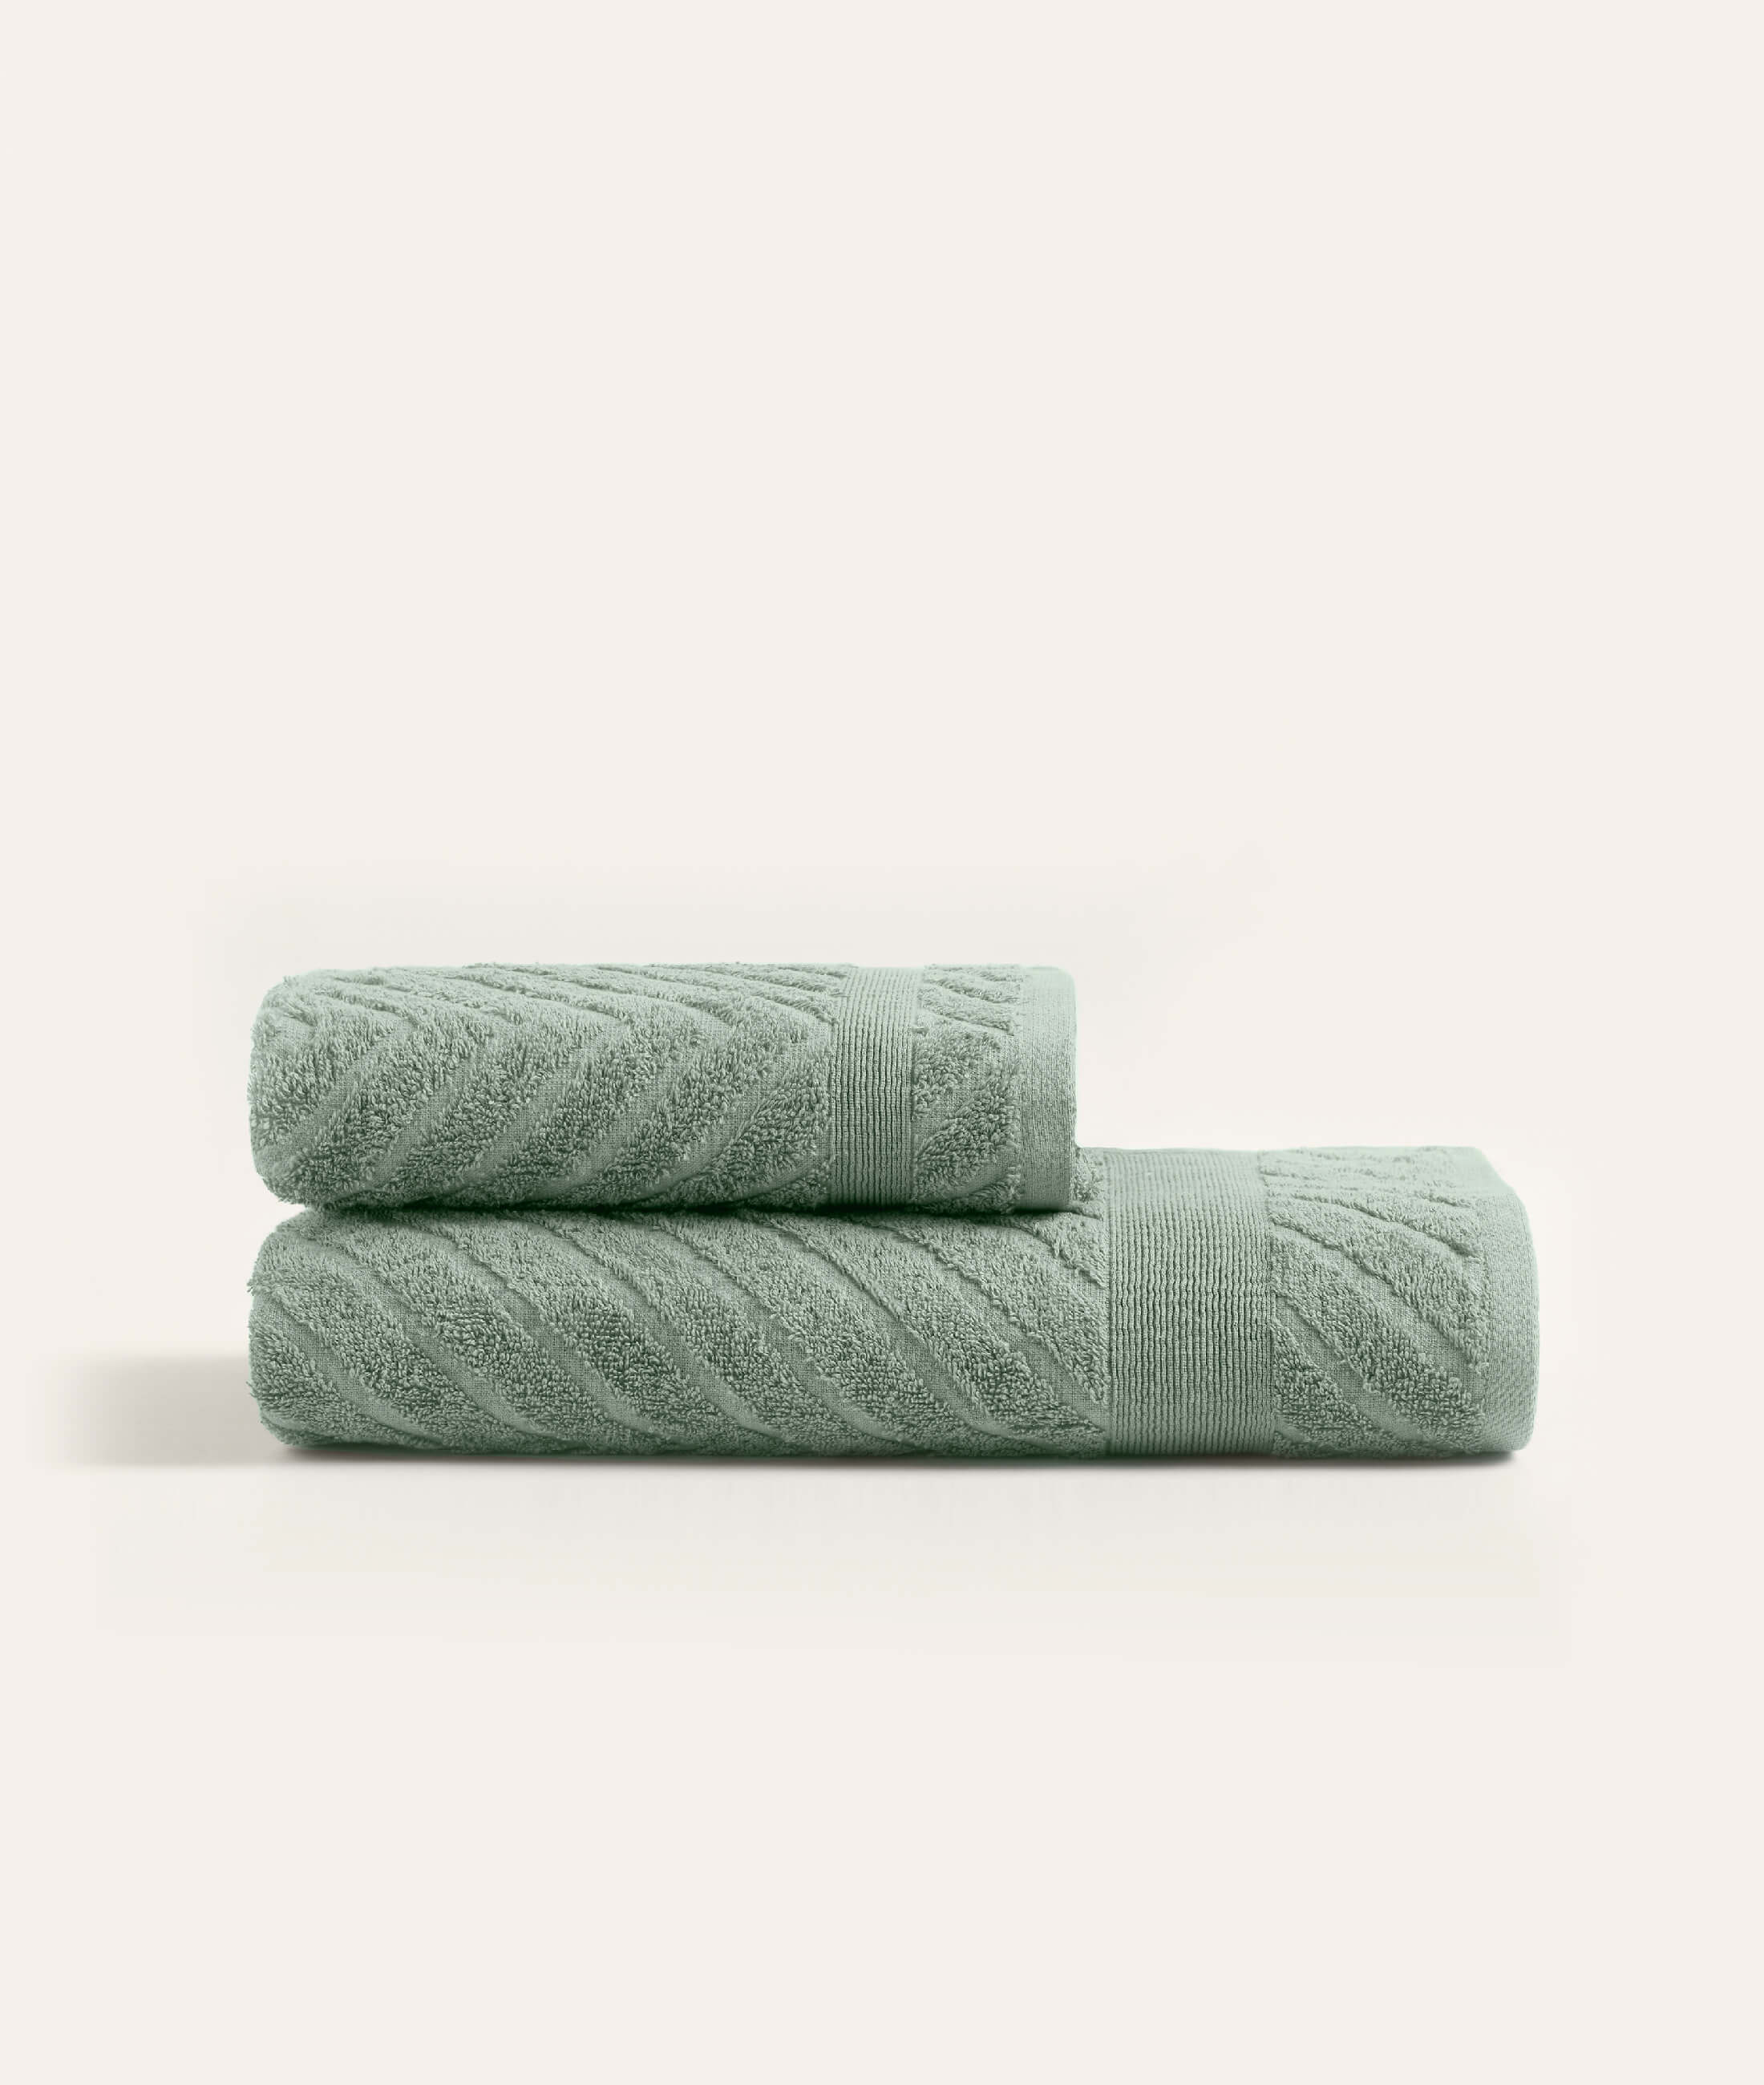 Lycian Jacquard Border Green Set of 2 Towels Herringbone 1026A